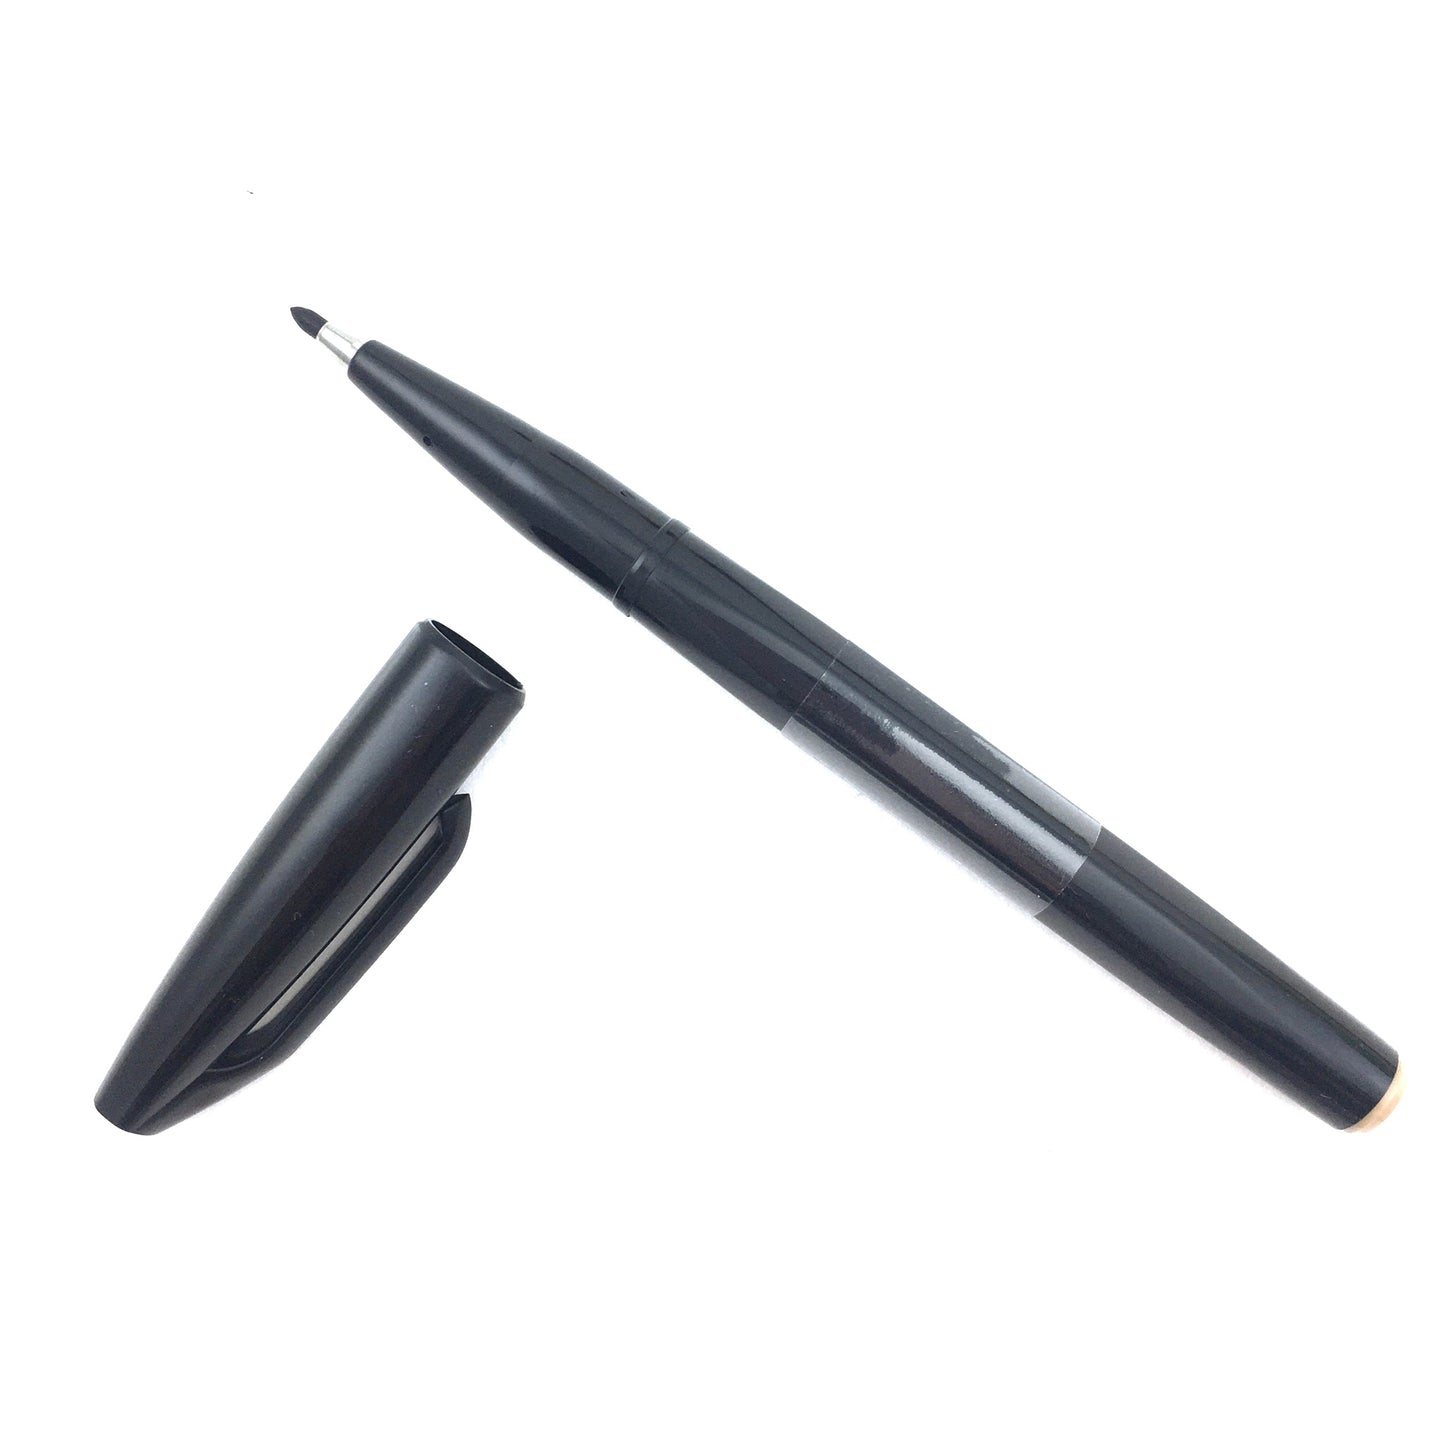 Pentel Sign Pen with Fiber Tip - Black by Pentel - K. A. Artist Shop